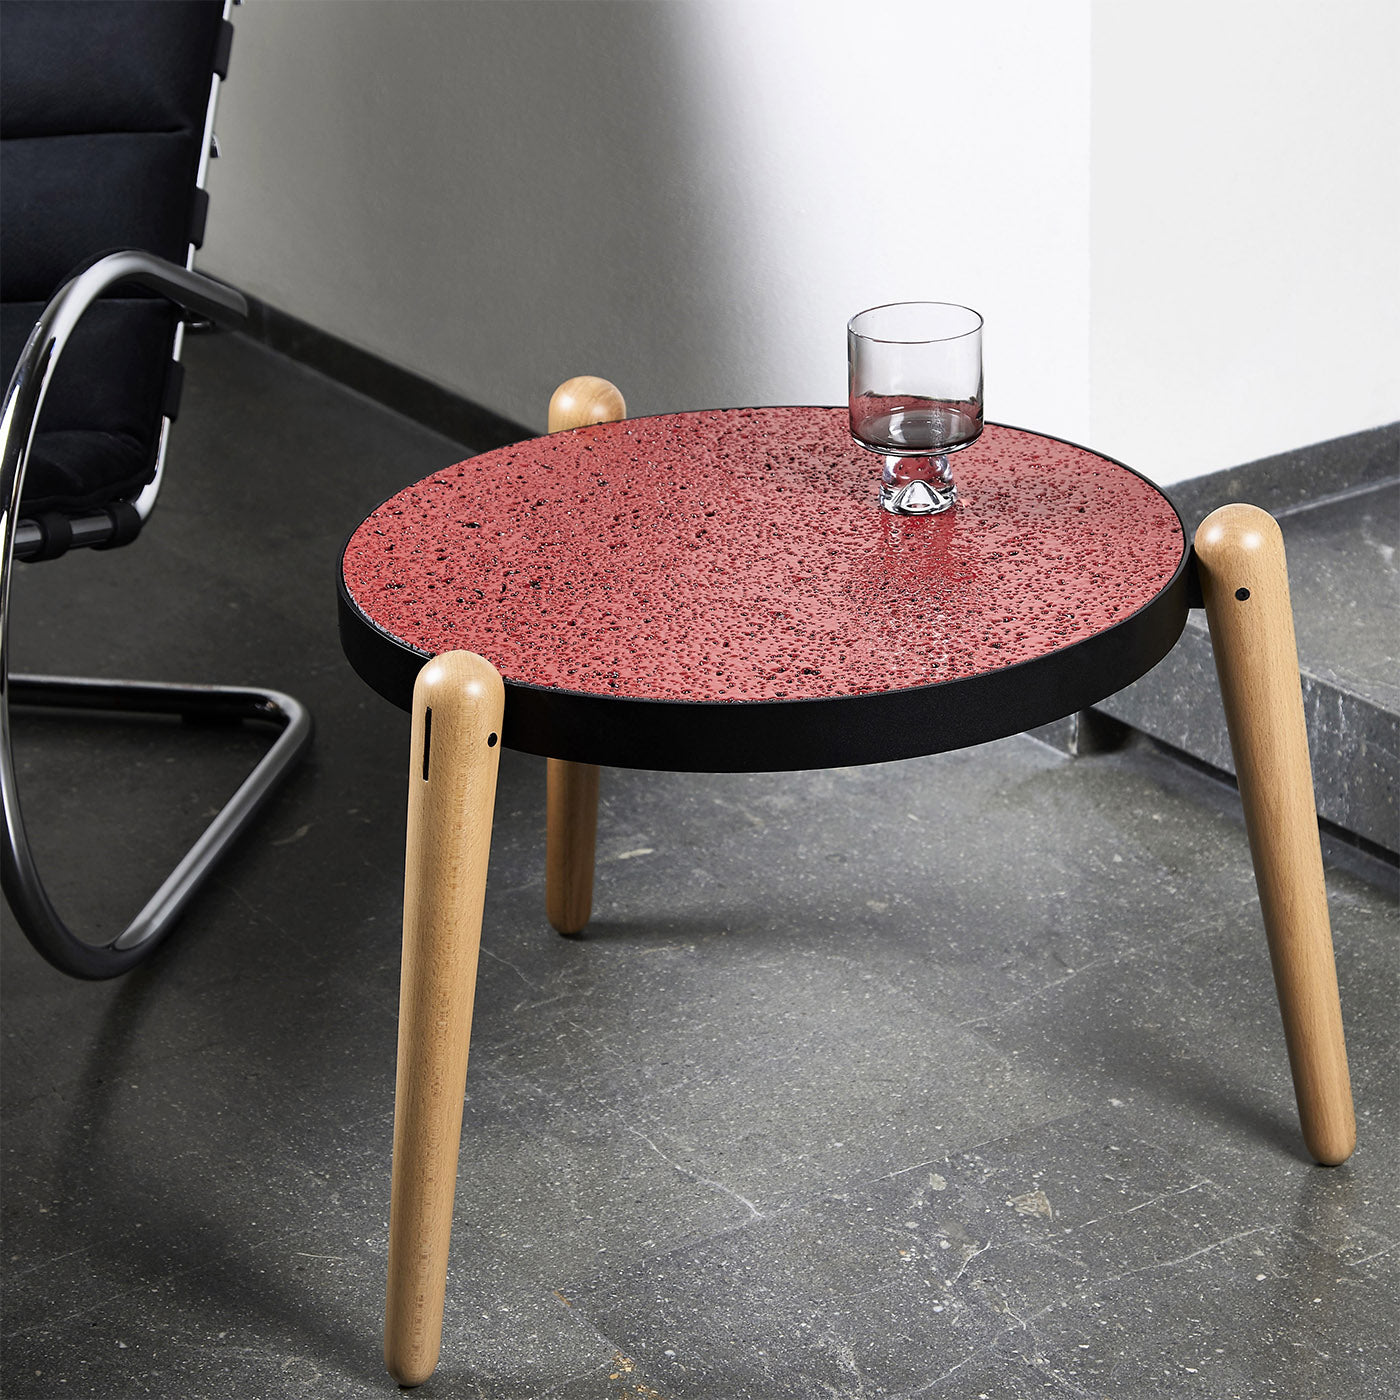 Tris Perciata Stone Round Coffee Table #2 by Luca Maci - Alternative view 2